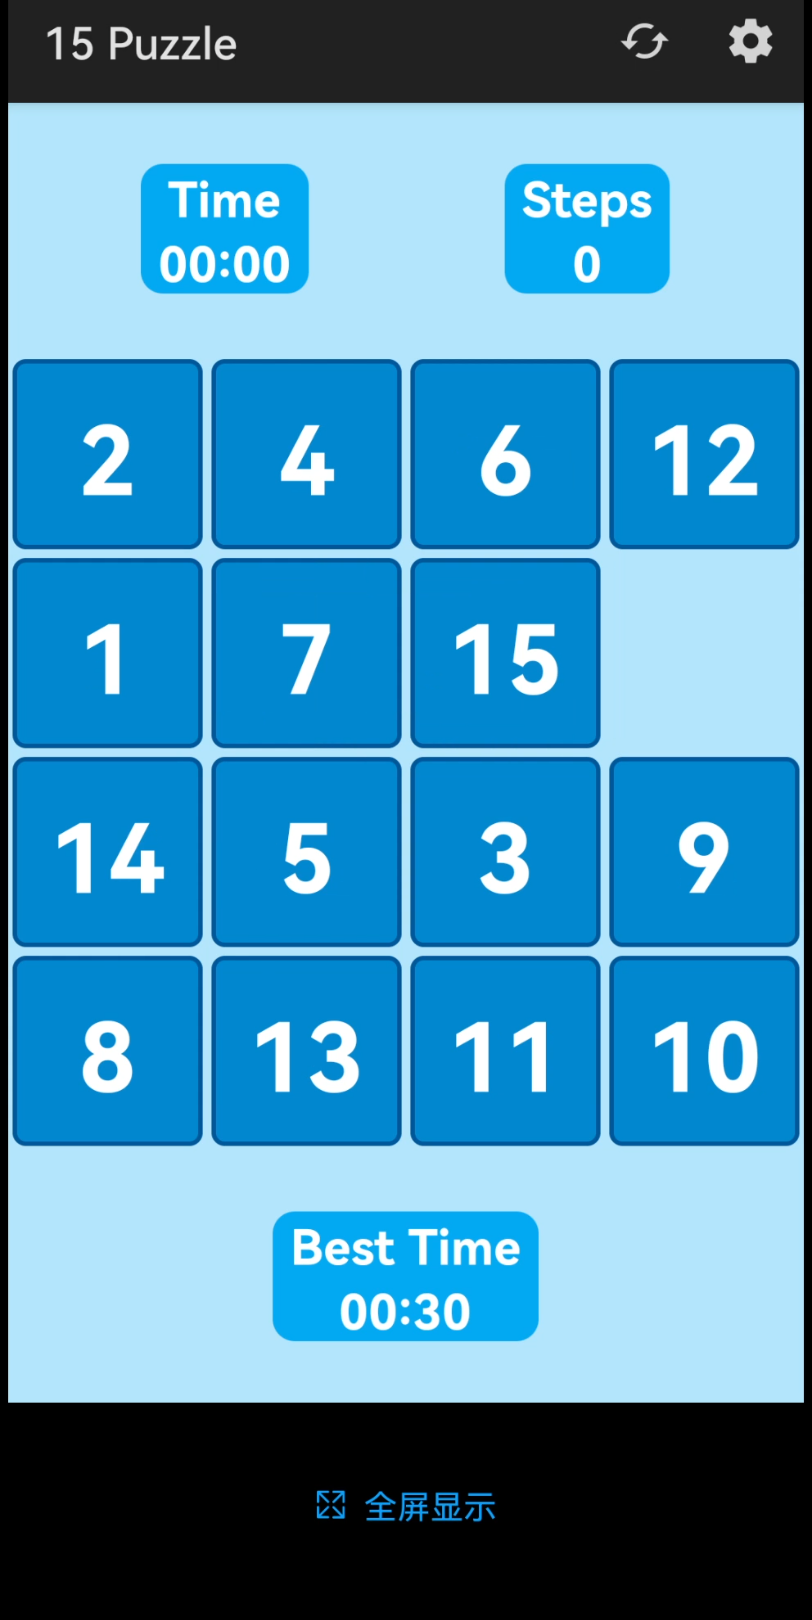 15谜题：15puzzles4*4单次记录19秒